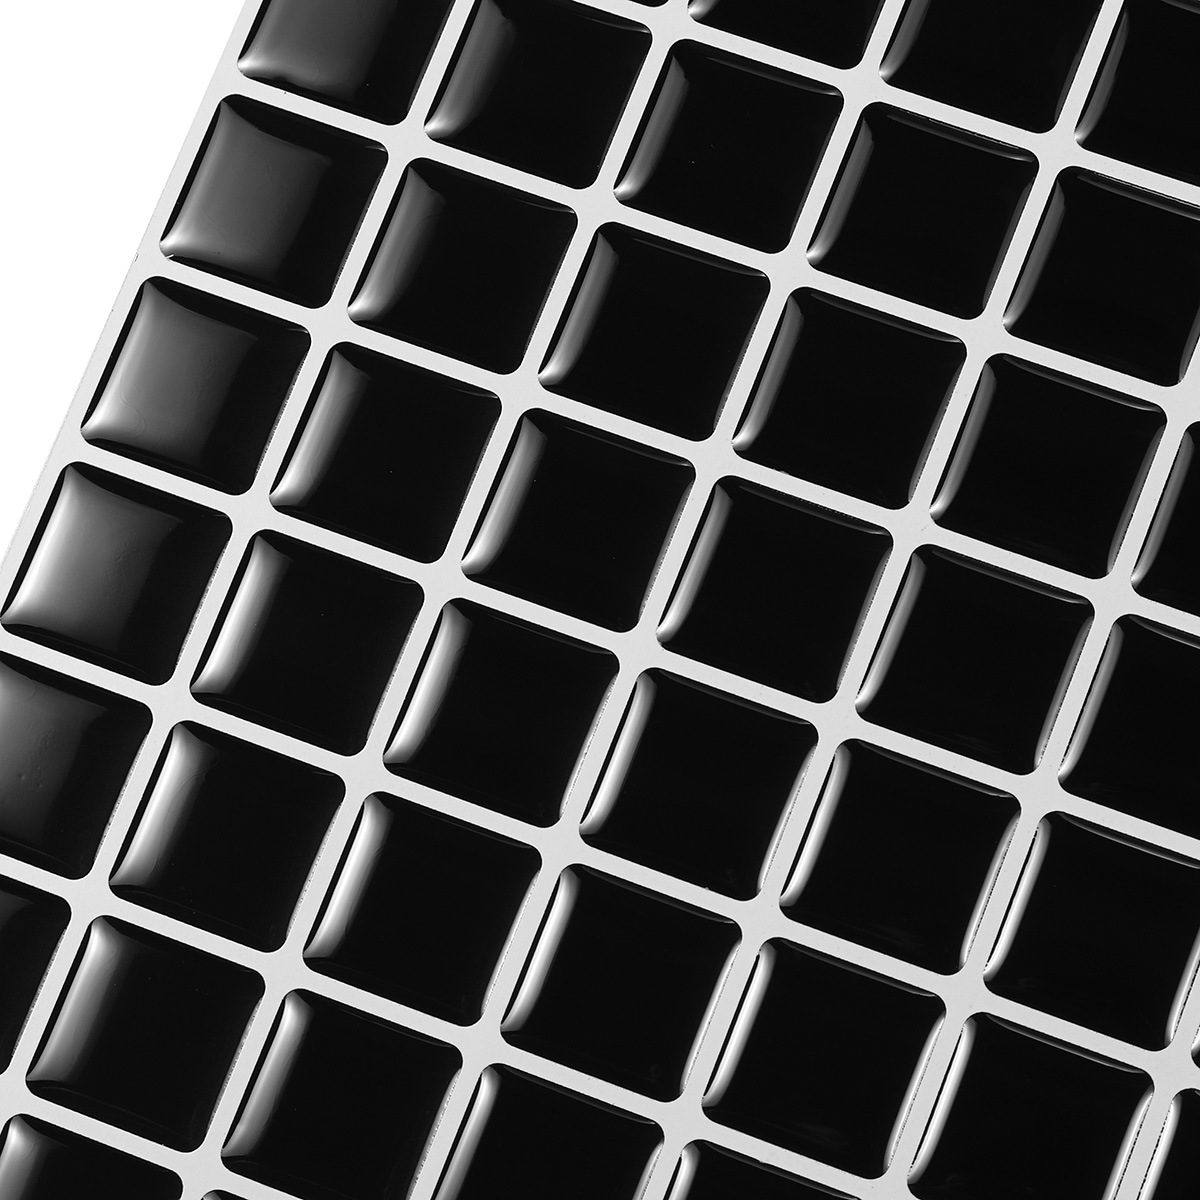 3D-Mosaics-Waterproof-and-Oil-proof-Black-and-White-Crystal-Epoxy-Three-dimensional-Self-adhesive-Wa-1824203-9